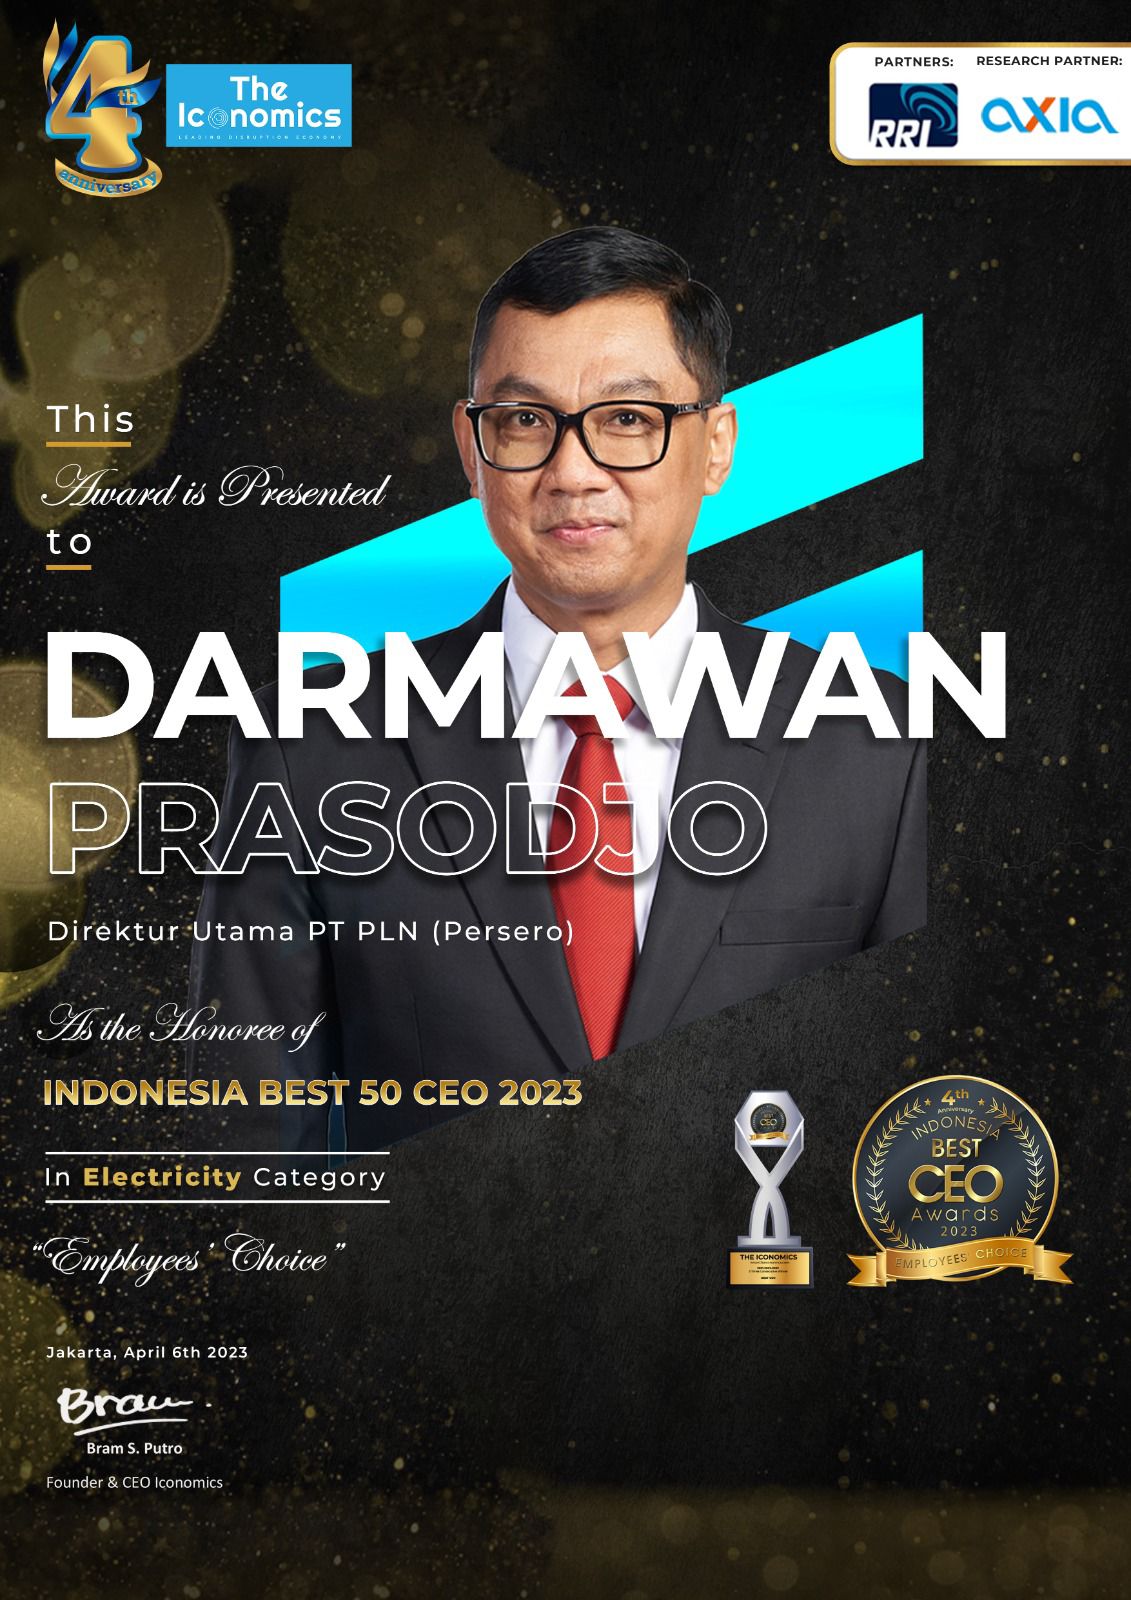 Direktur Utama PT PLN (Persero) Darmawan Prasodjo berhasil mendapatkan penghargaan sebagai Indonesia Best 50 CE0 “Employees Choice” dalam kategori Electricity yang diselenggarakan oleh The Iconomics.